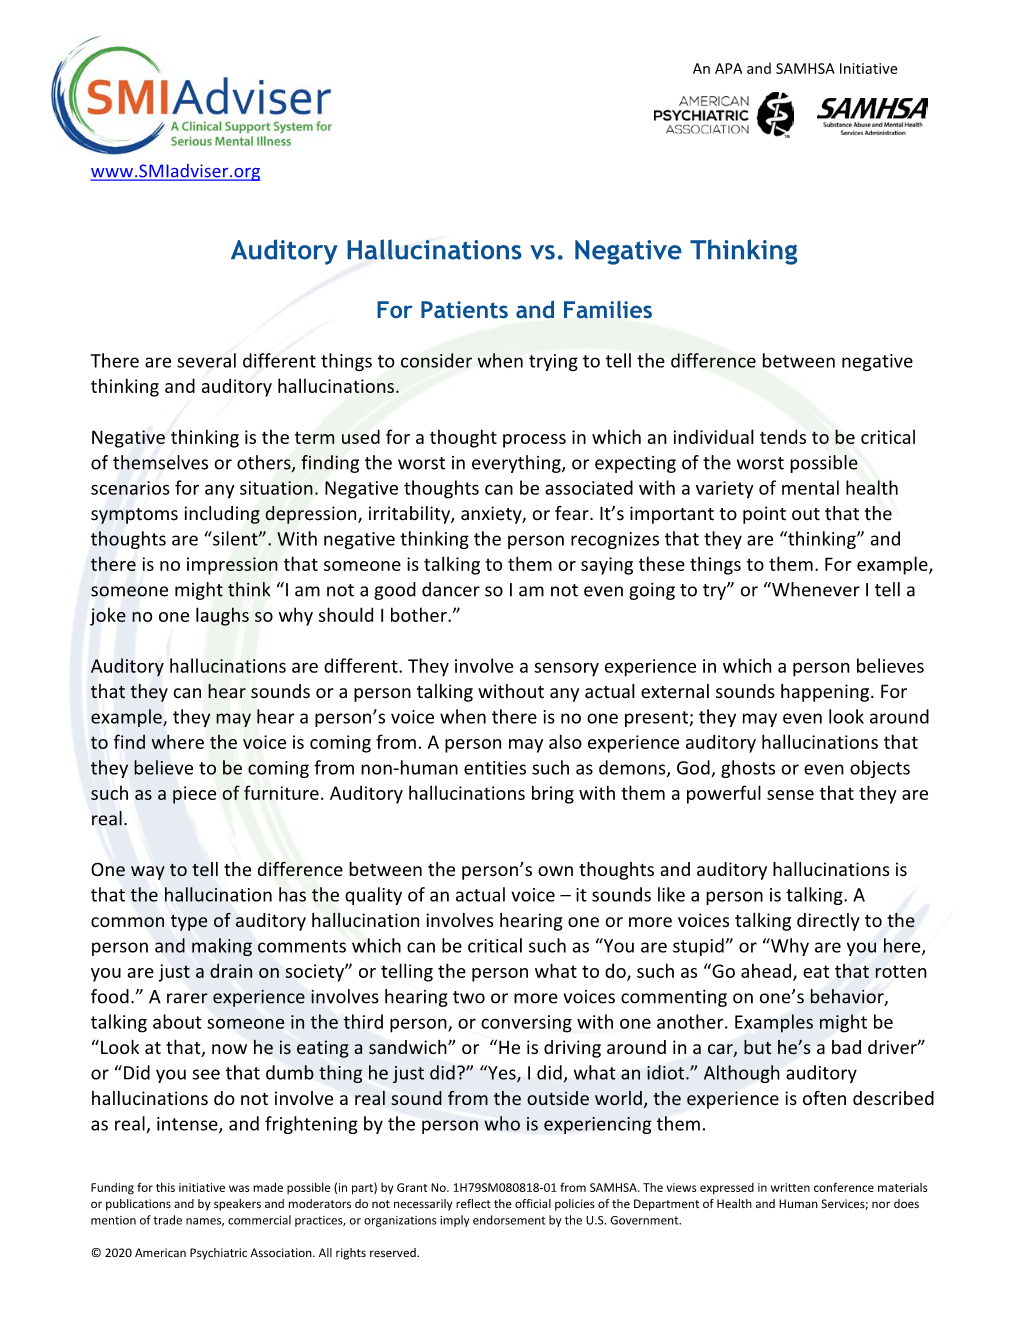 Auditory Hallucinations Vs. Negative Thinking